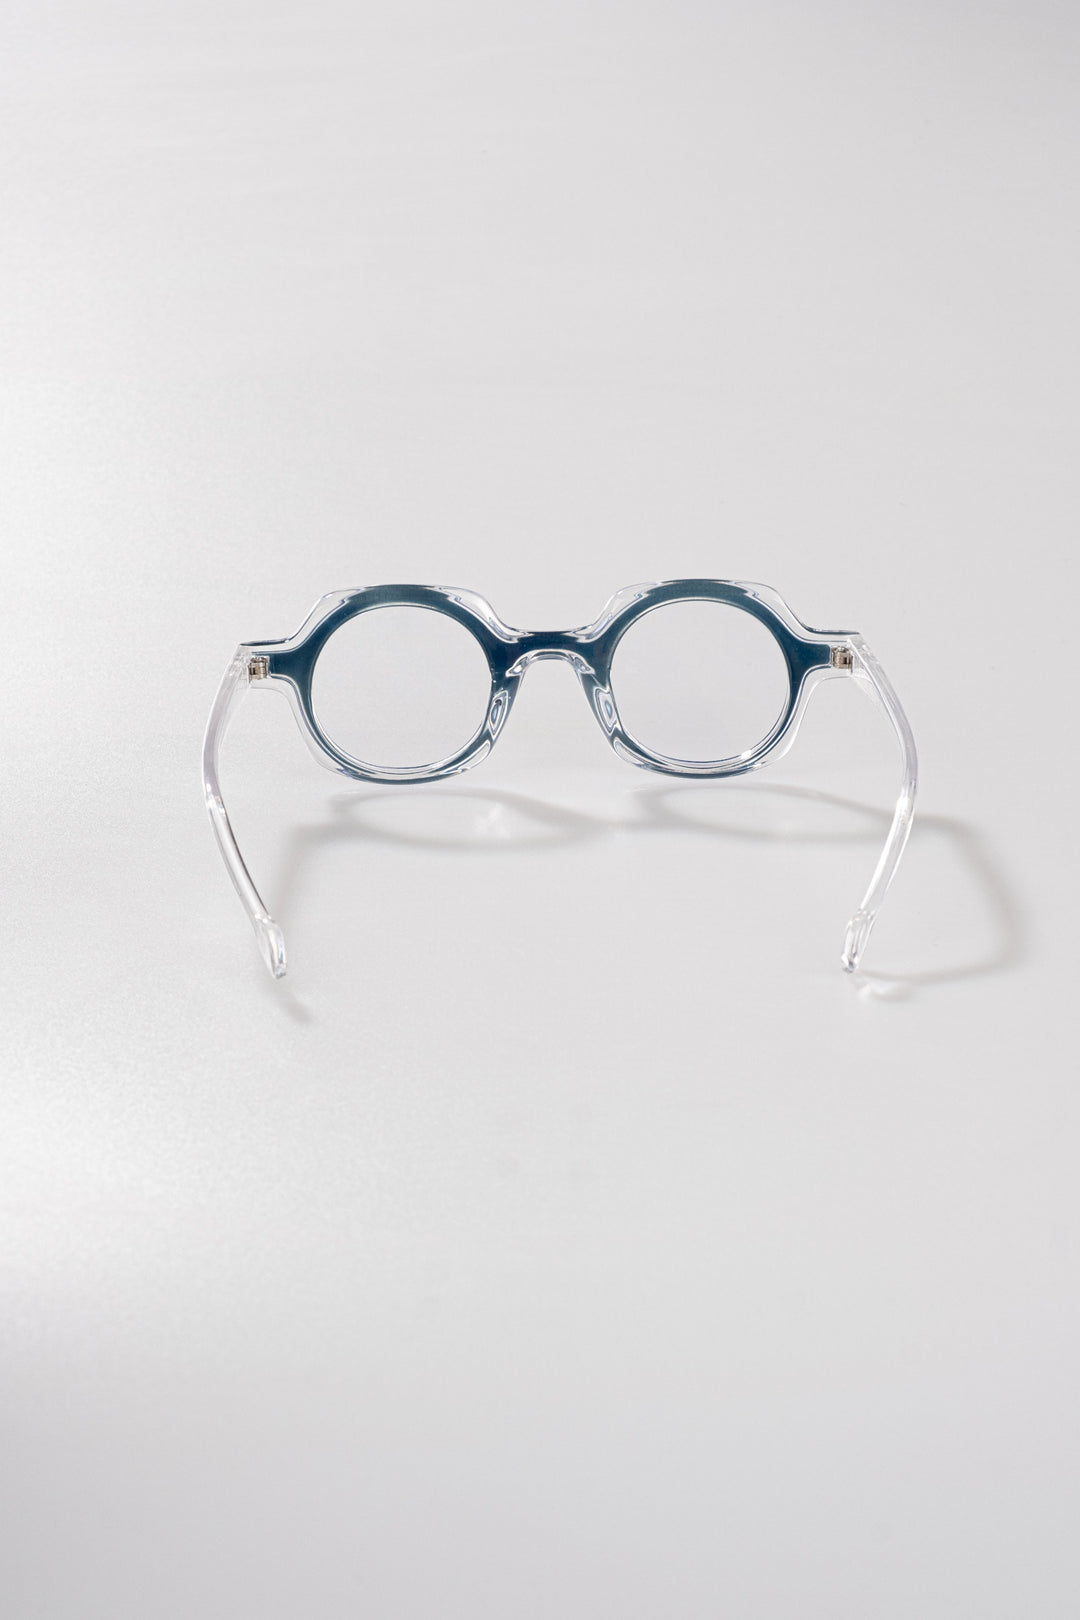 Sajose Blue Light Protection Glasses